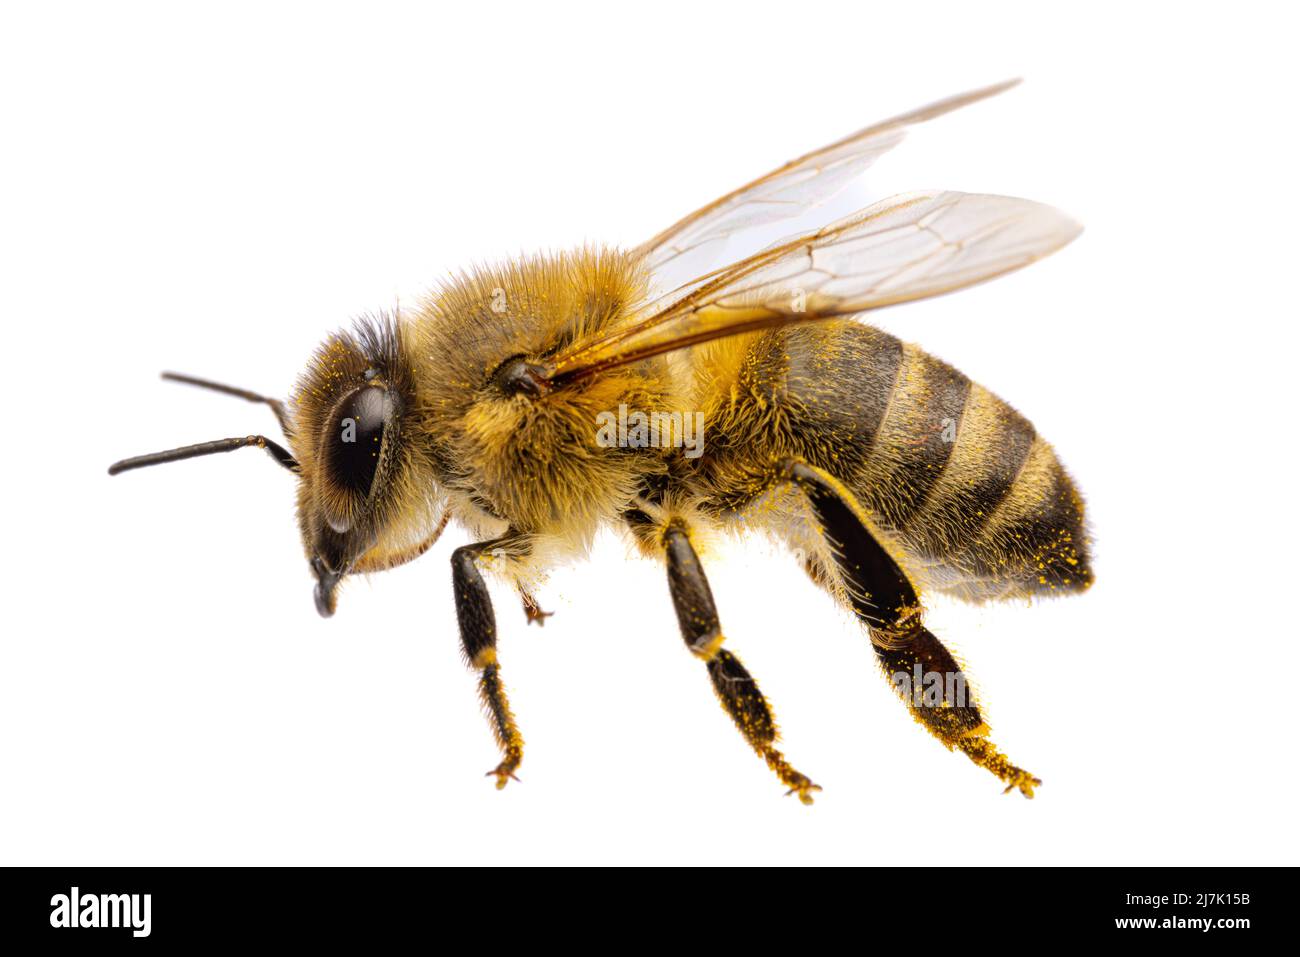 Insectos de europa - abejas: Macro de vista lateral de abeja de miel occidental ( Apis mellifera) aislada sobre fondo blanco con alas esparcidas Foto de stock